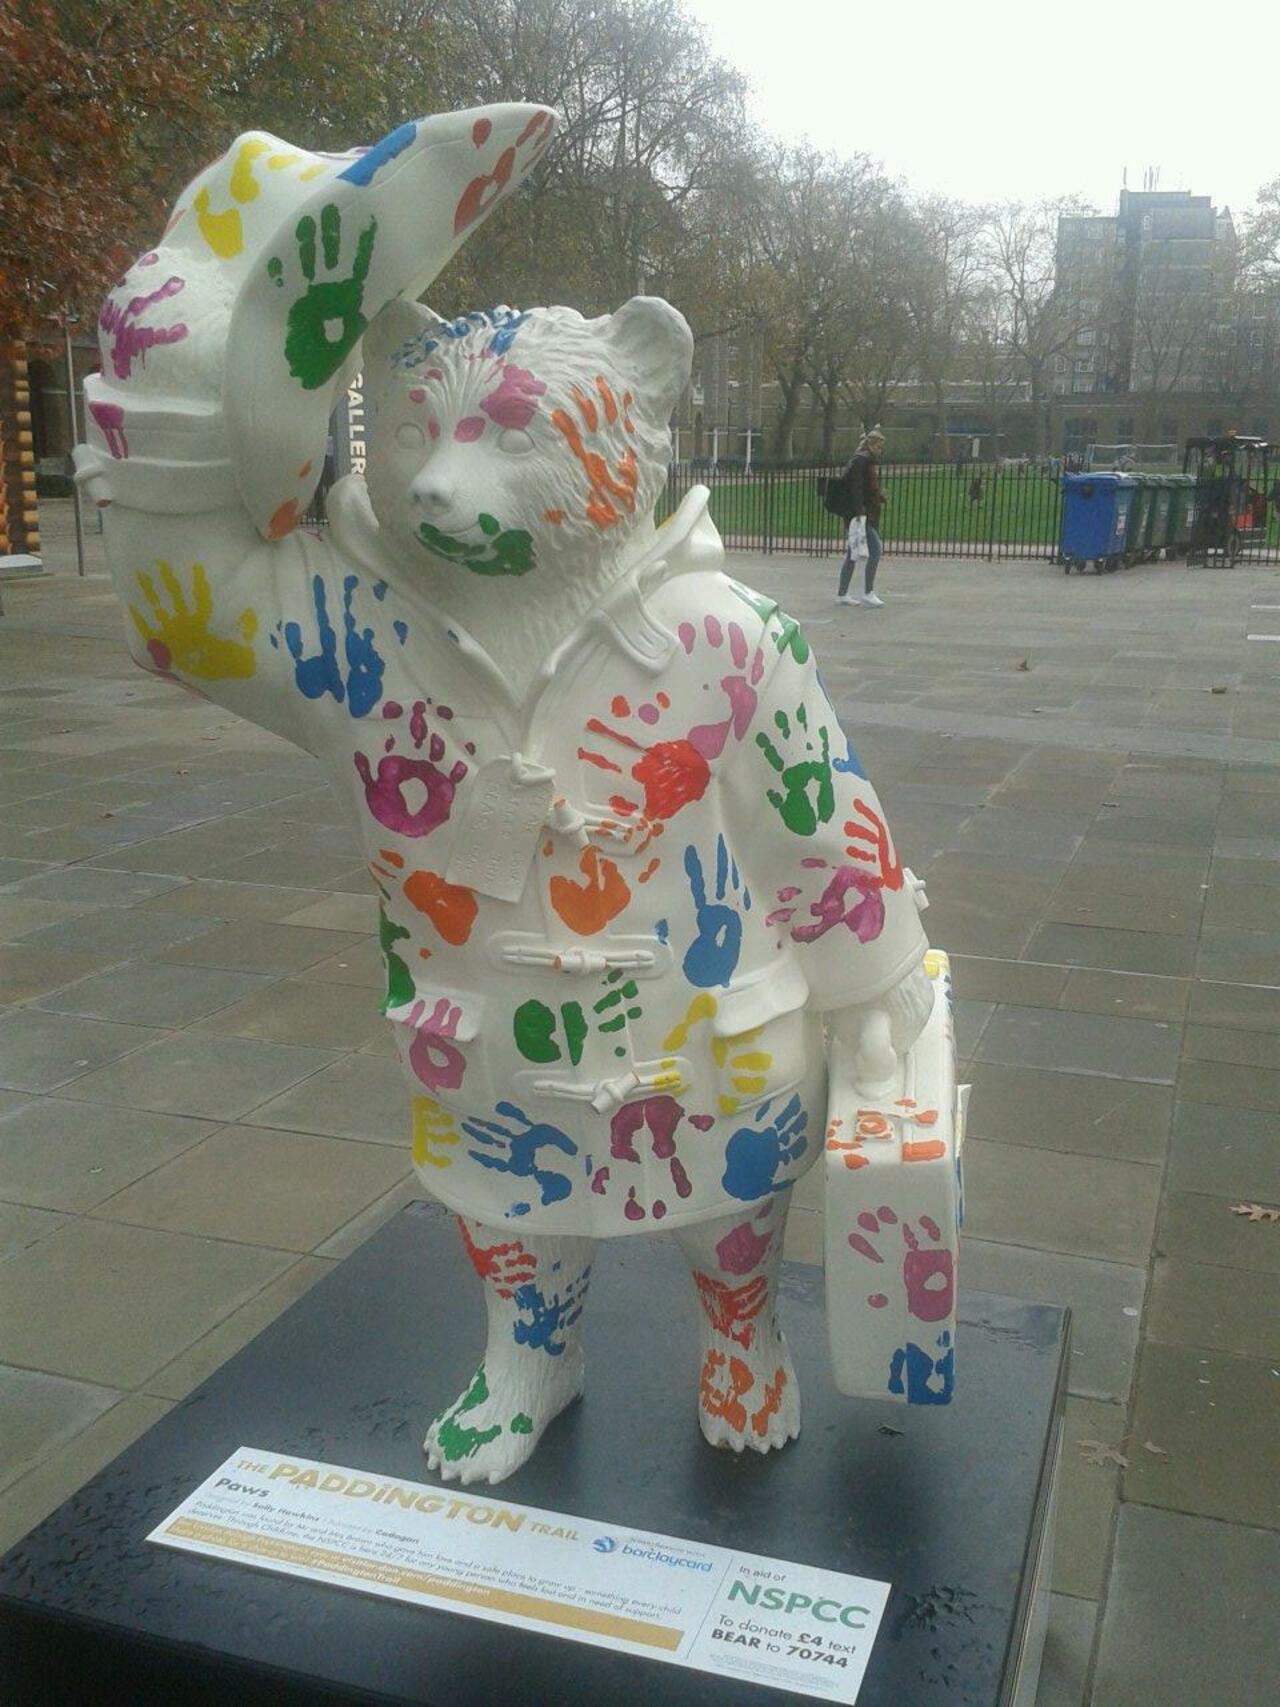 Bear he is! 'Paws' Paddington Bear sculpture at @DOYSQ in Chelsea in aid of @NSPCC #PaddingtonTrail #loveLondon #art http://t.co/XJCqD3cTRR